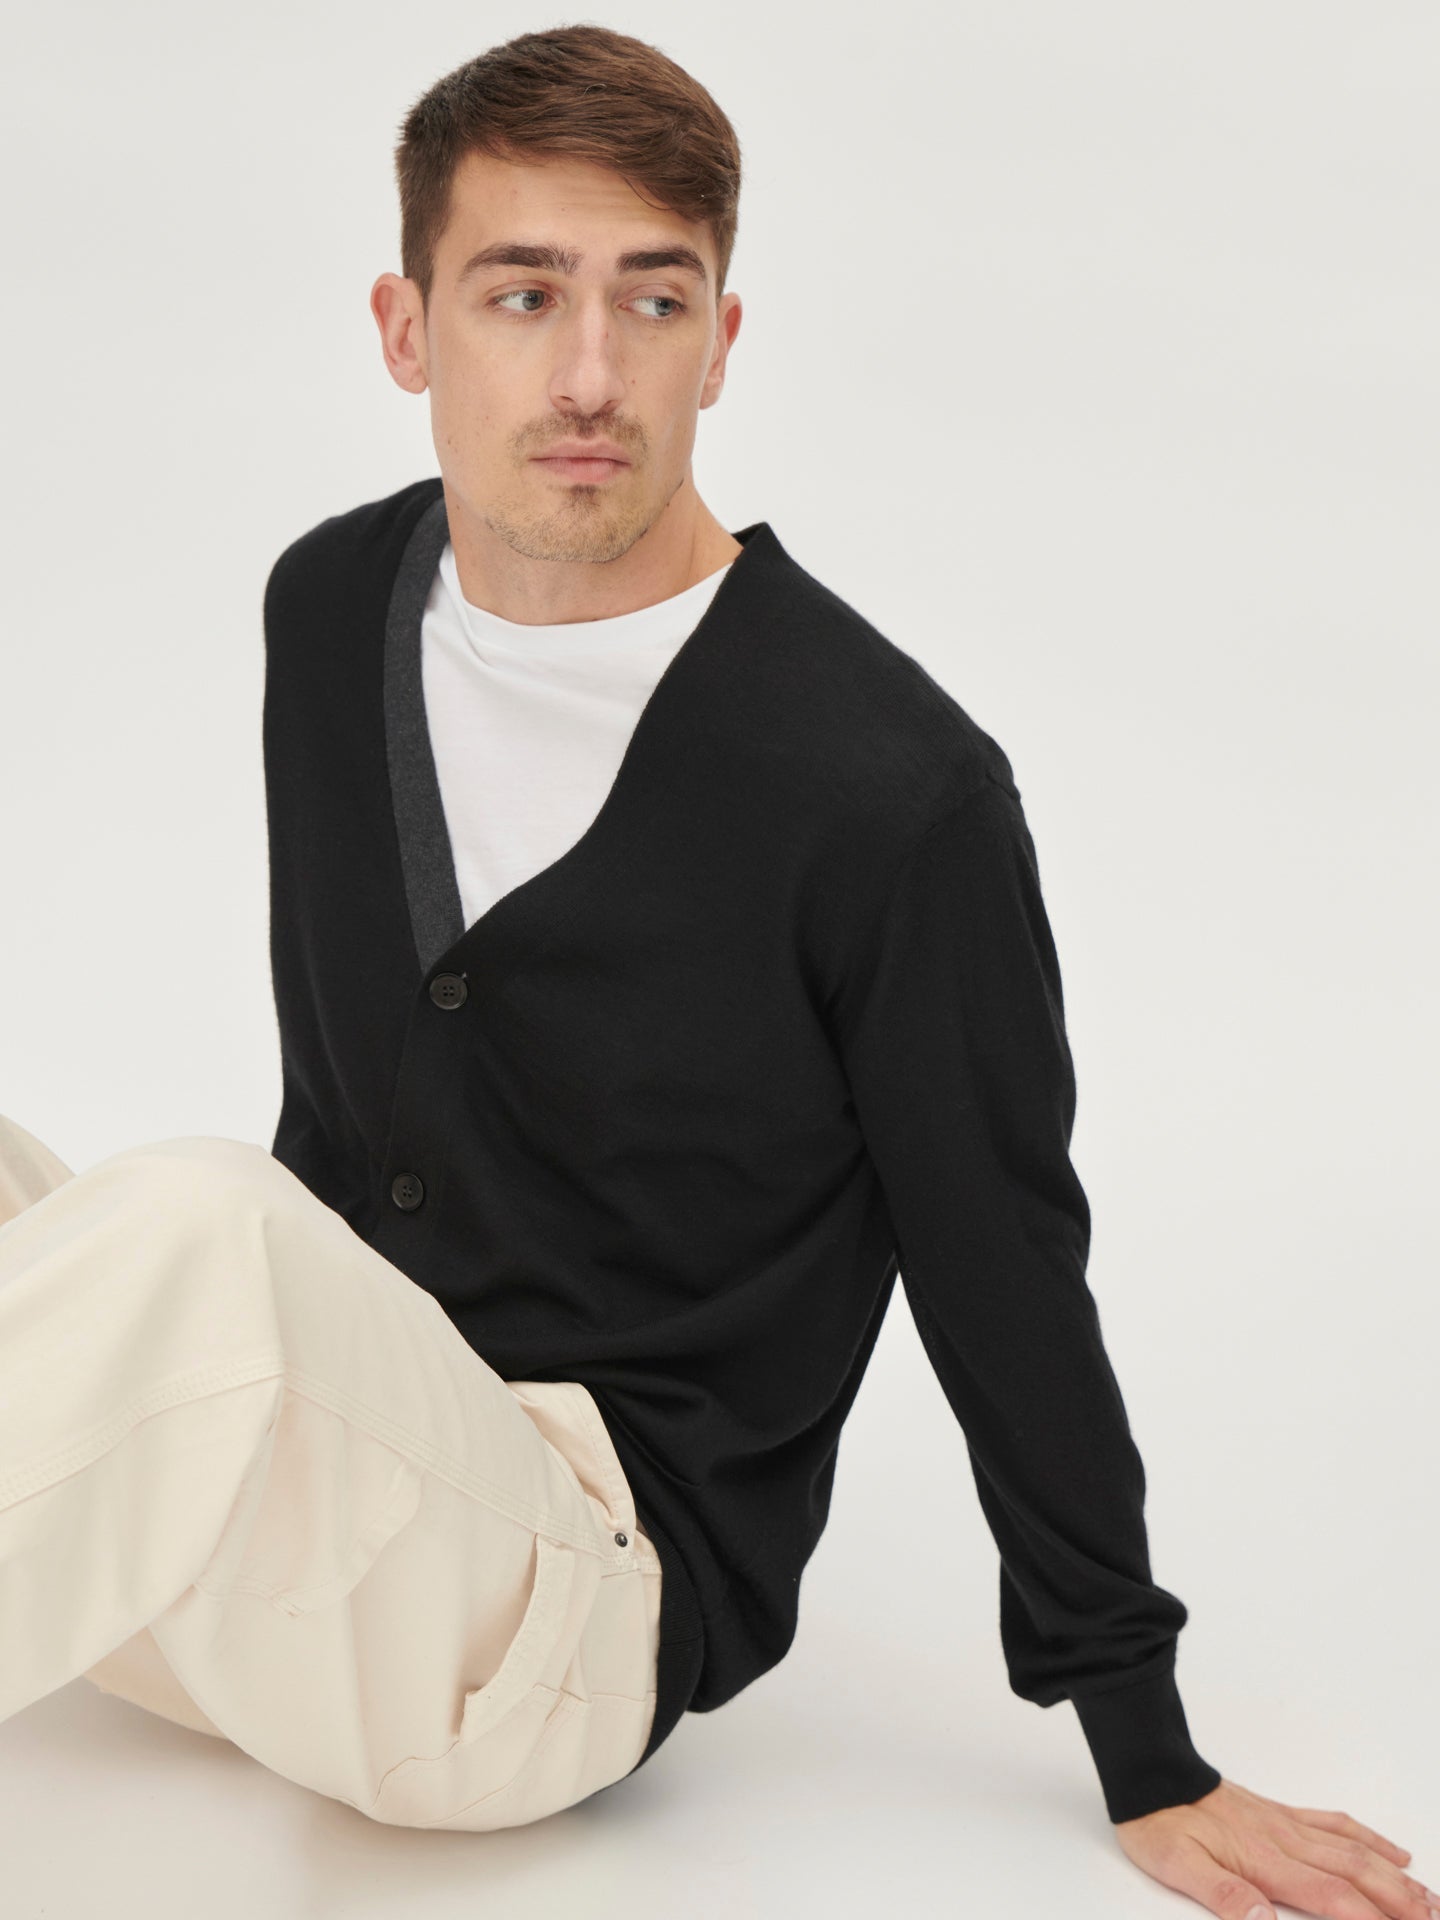 Men's Cashmere Contrast Placket Cardigan Black - Gobi Cashmere